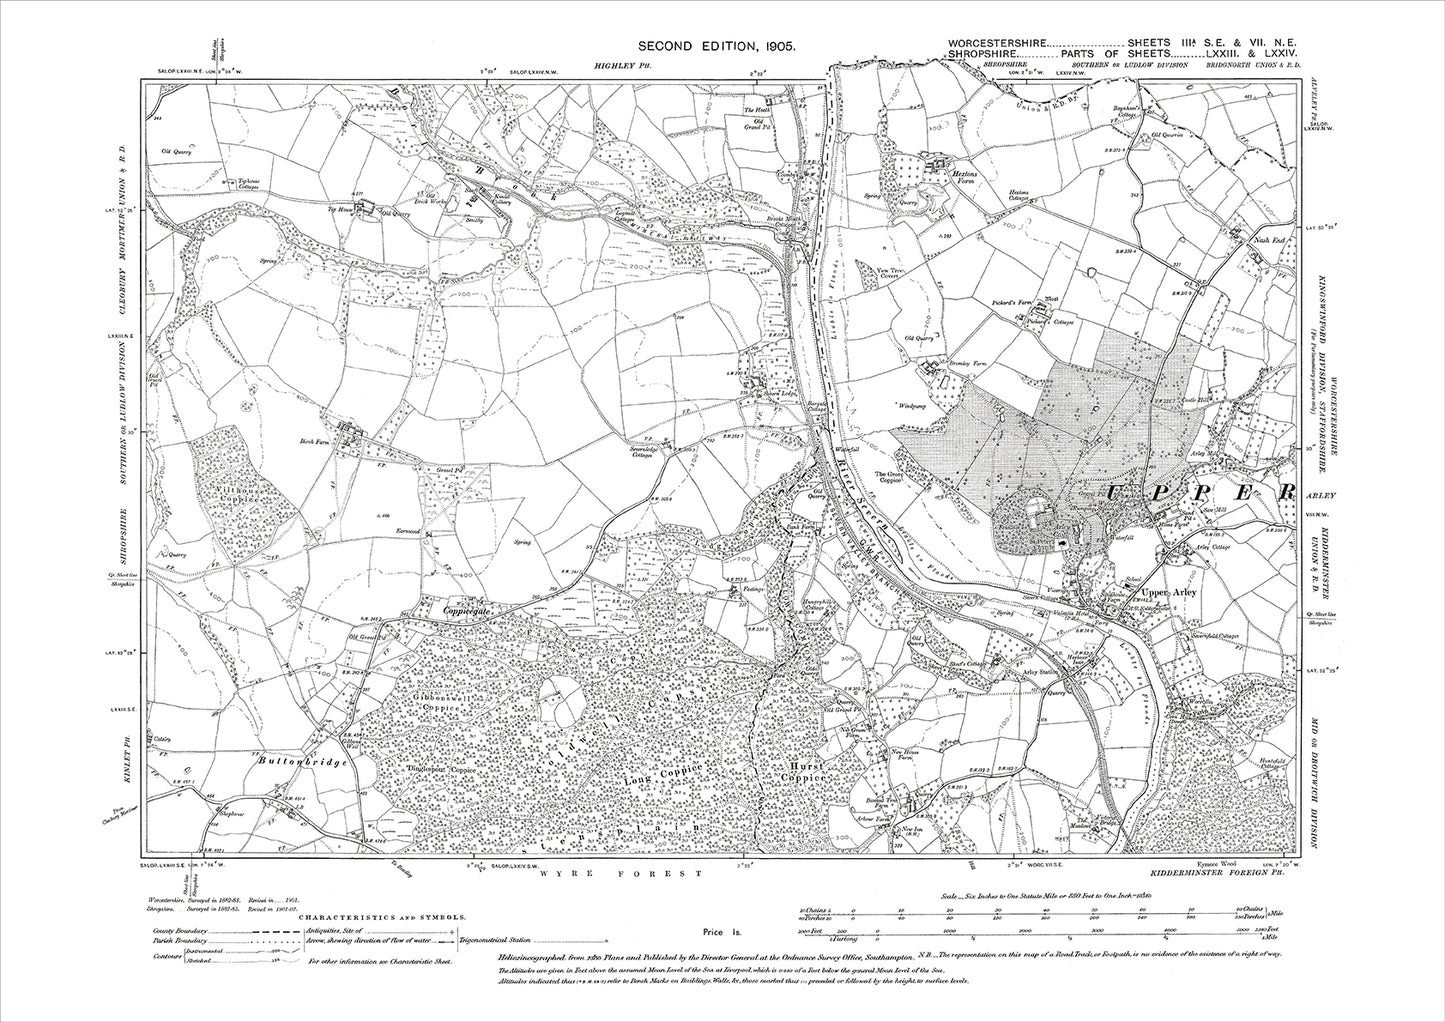 Upper Arley, old map Worcestershire 1905: 3aSE-7NE